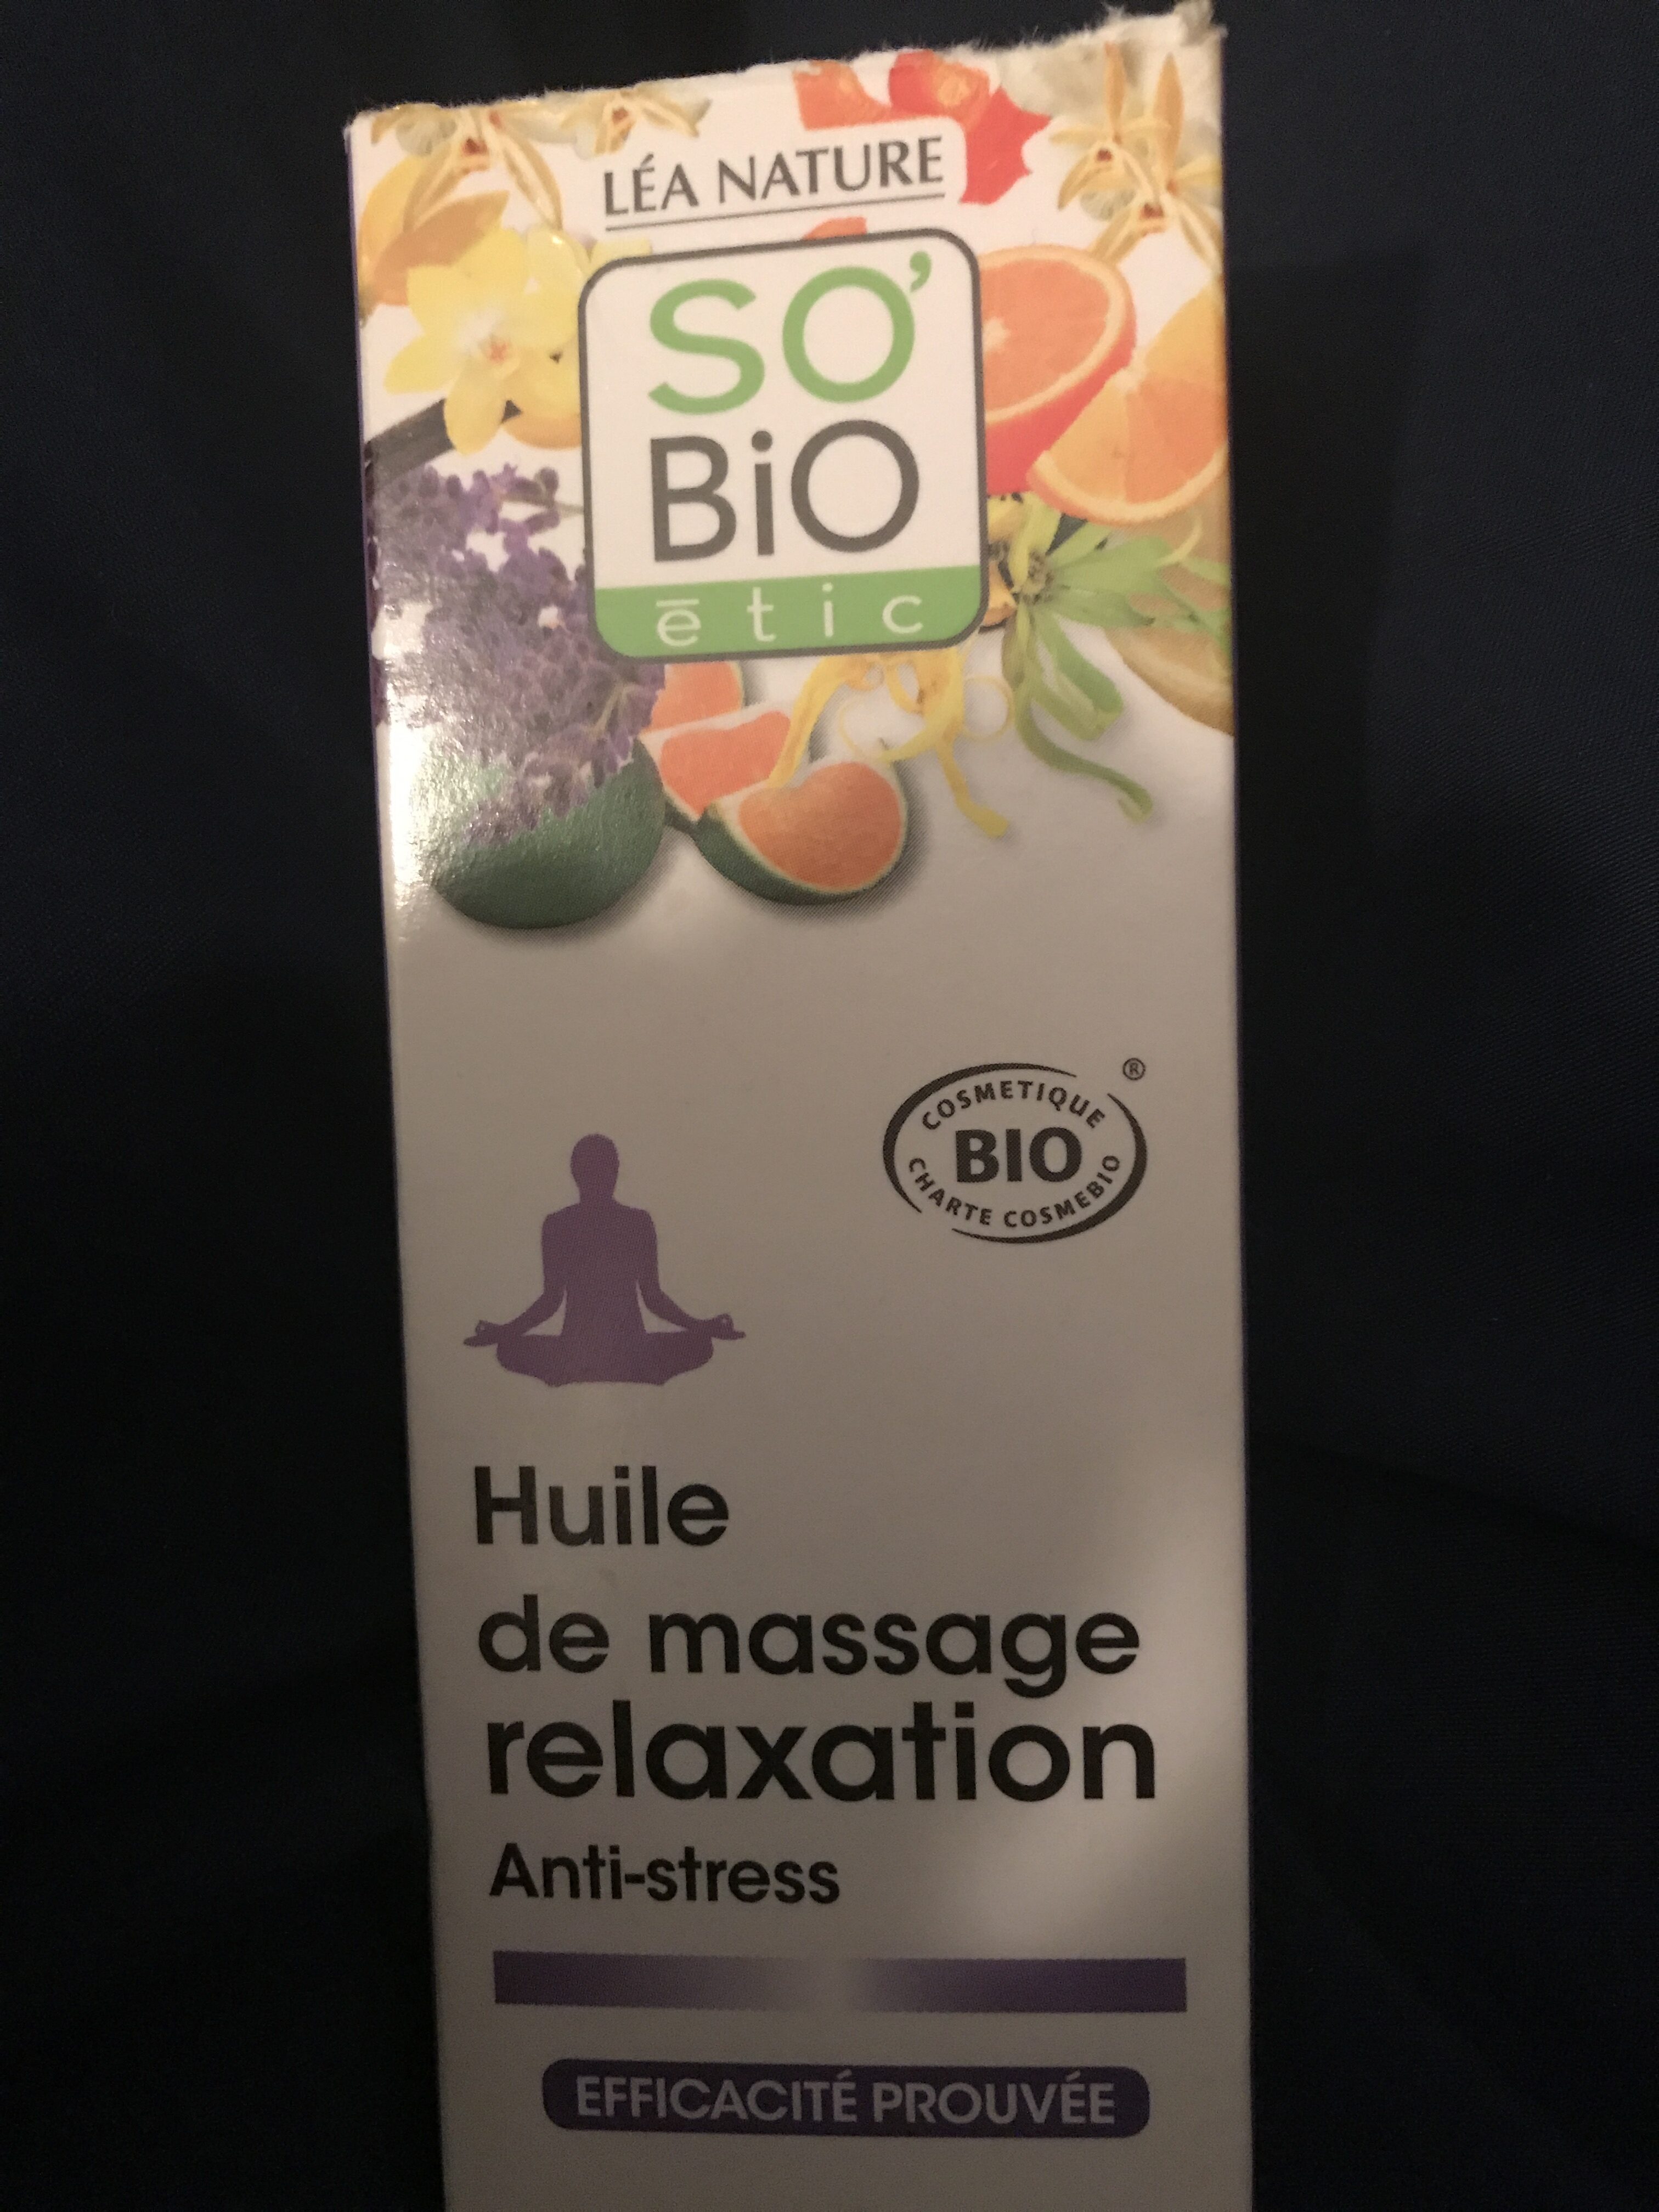 Huile de massage relaxation - Produto - fr